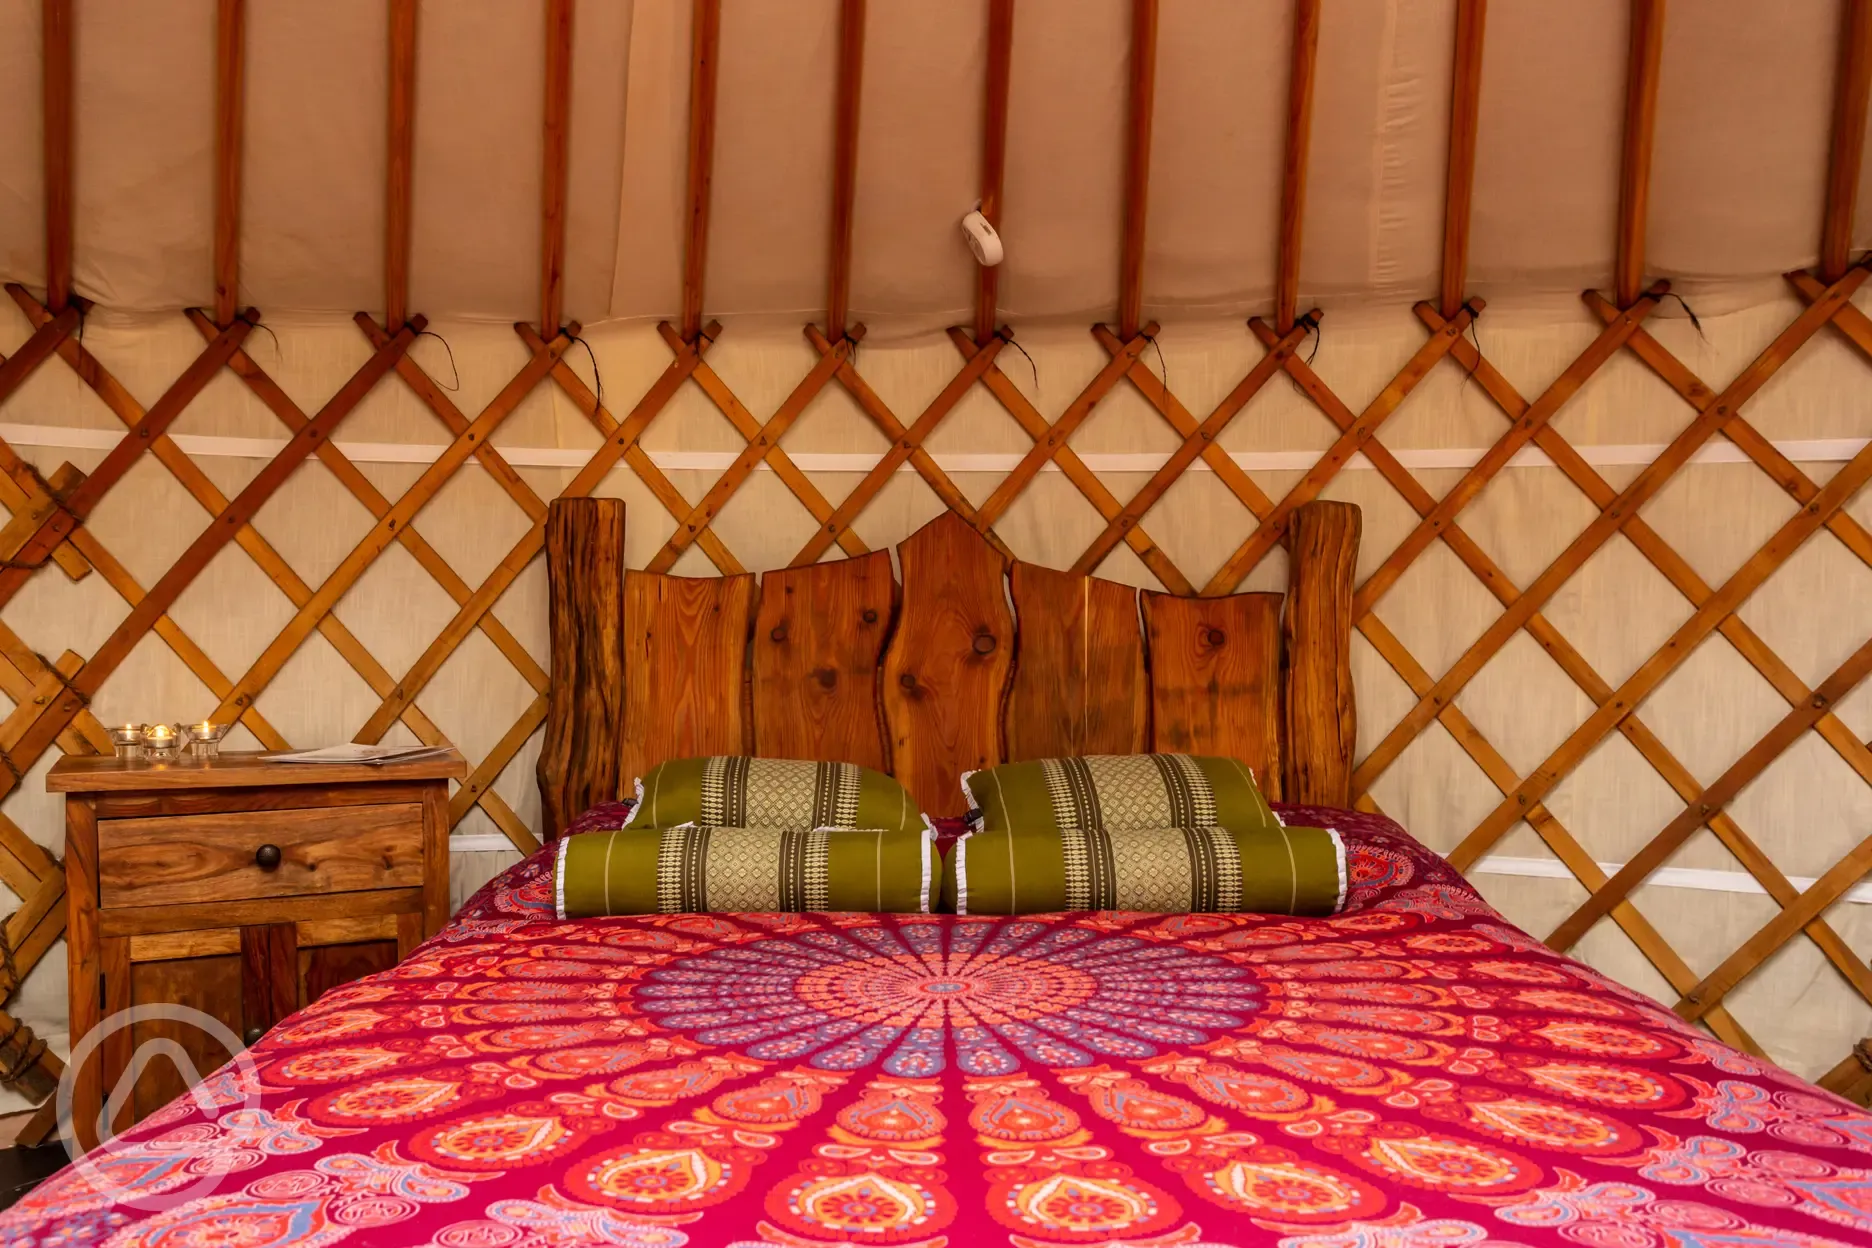 Meadow yurt